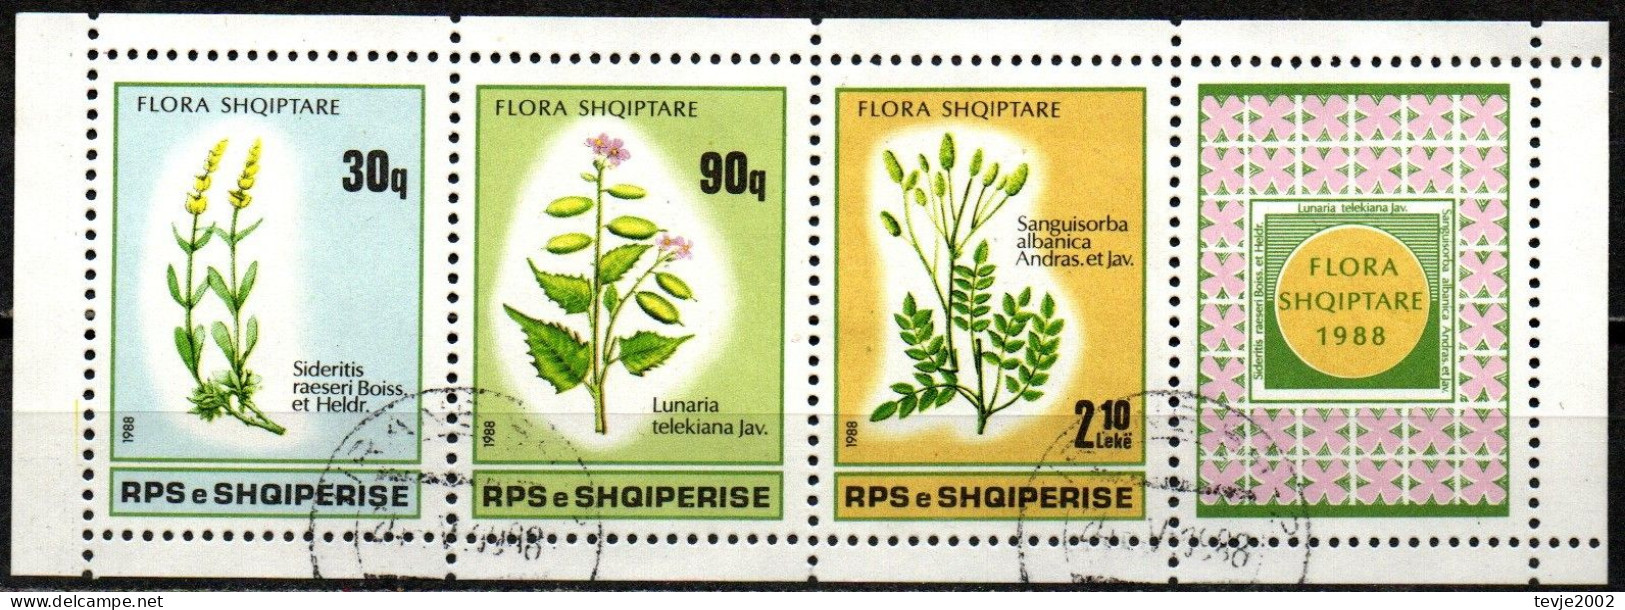 Albanien 1988 - Mi.Nr. 2358 - 2360 - Gestempelt Used - Blumen Flowers - Albania